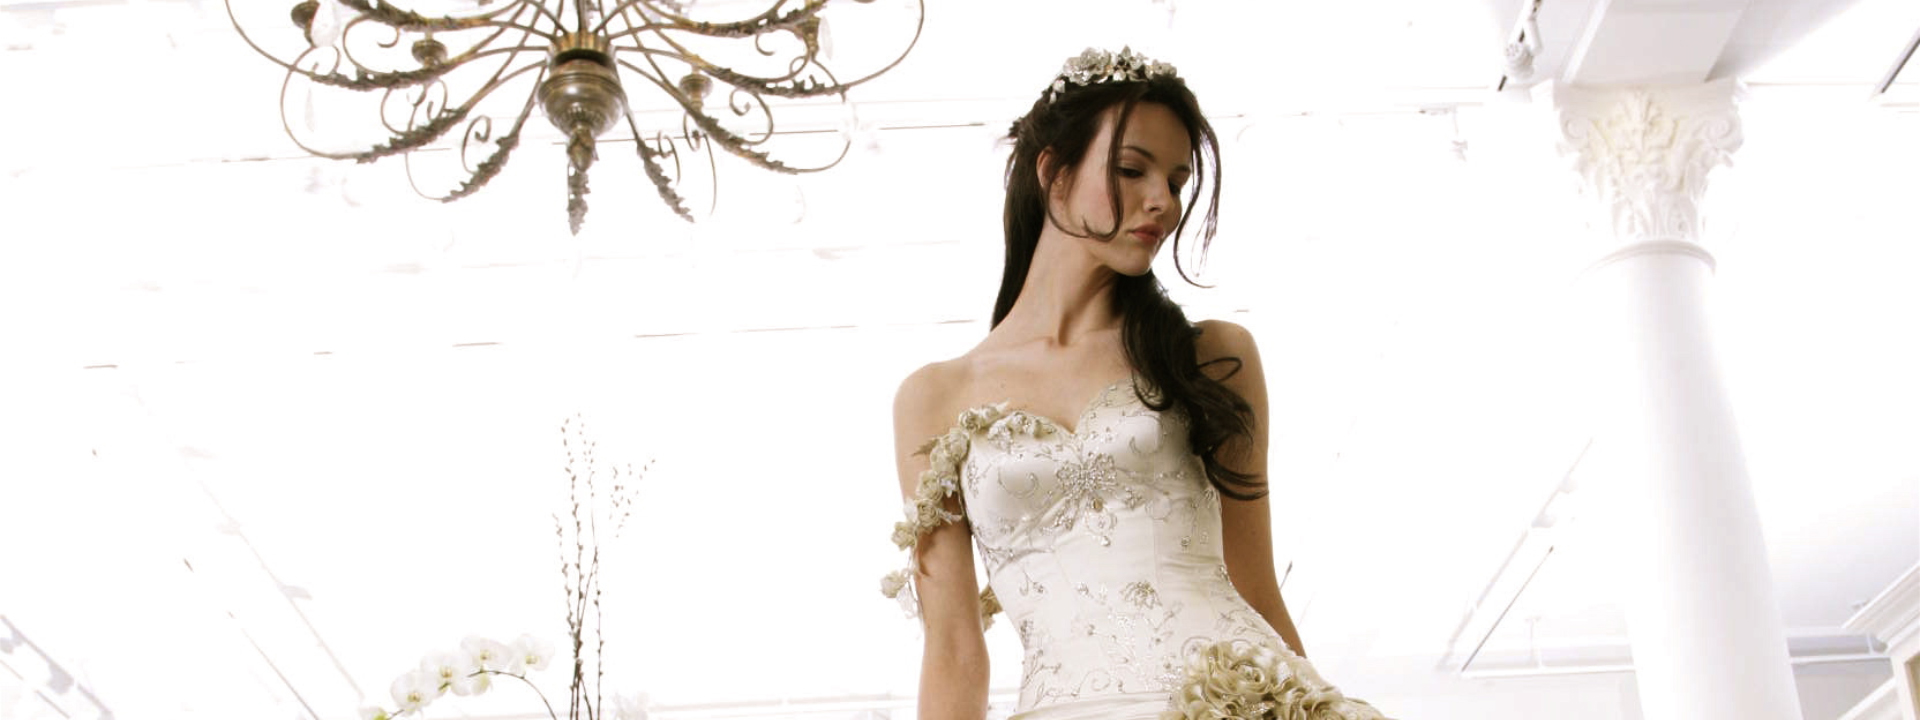 Kleinfeld's Most Expensive Pnina Tornai Gown Ever – Blog with regard to Wedding Gown Designer Pnina Tornai - Dress-Art